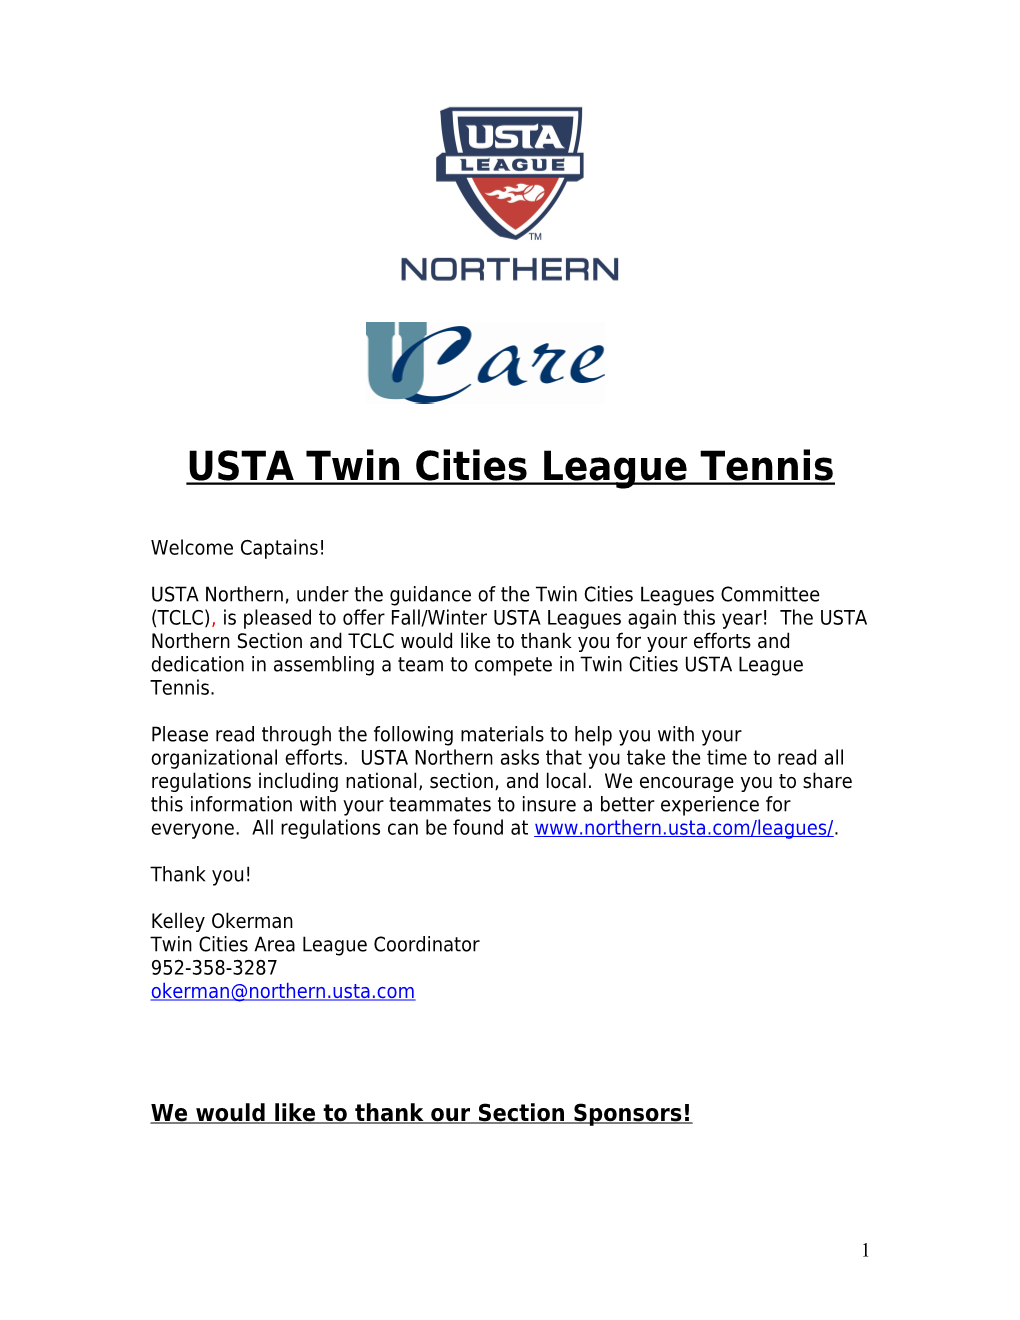 USTA Twin Cities League Tennis